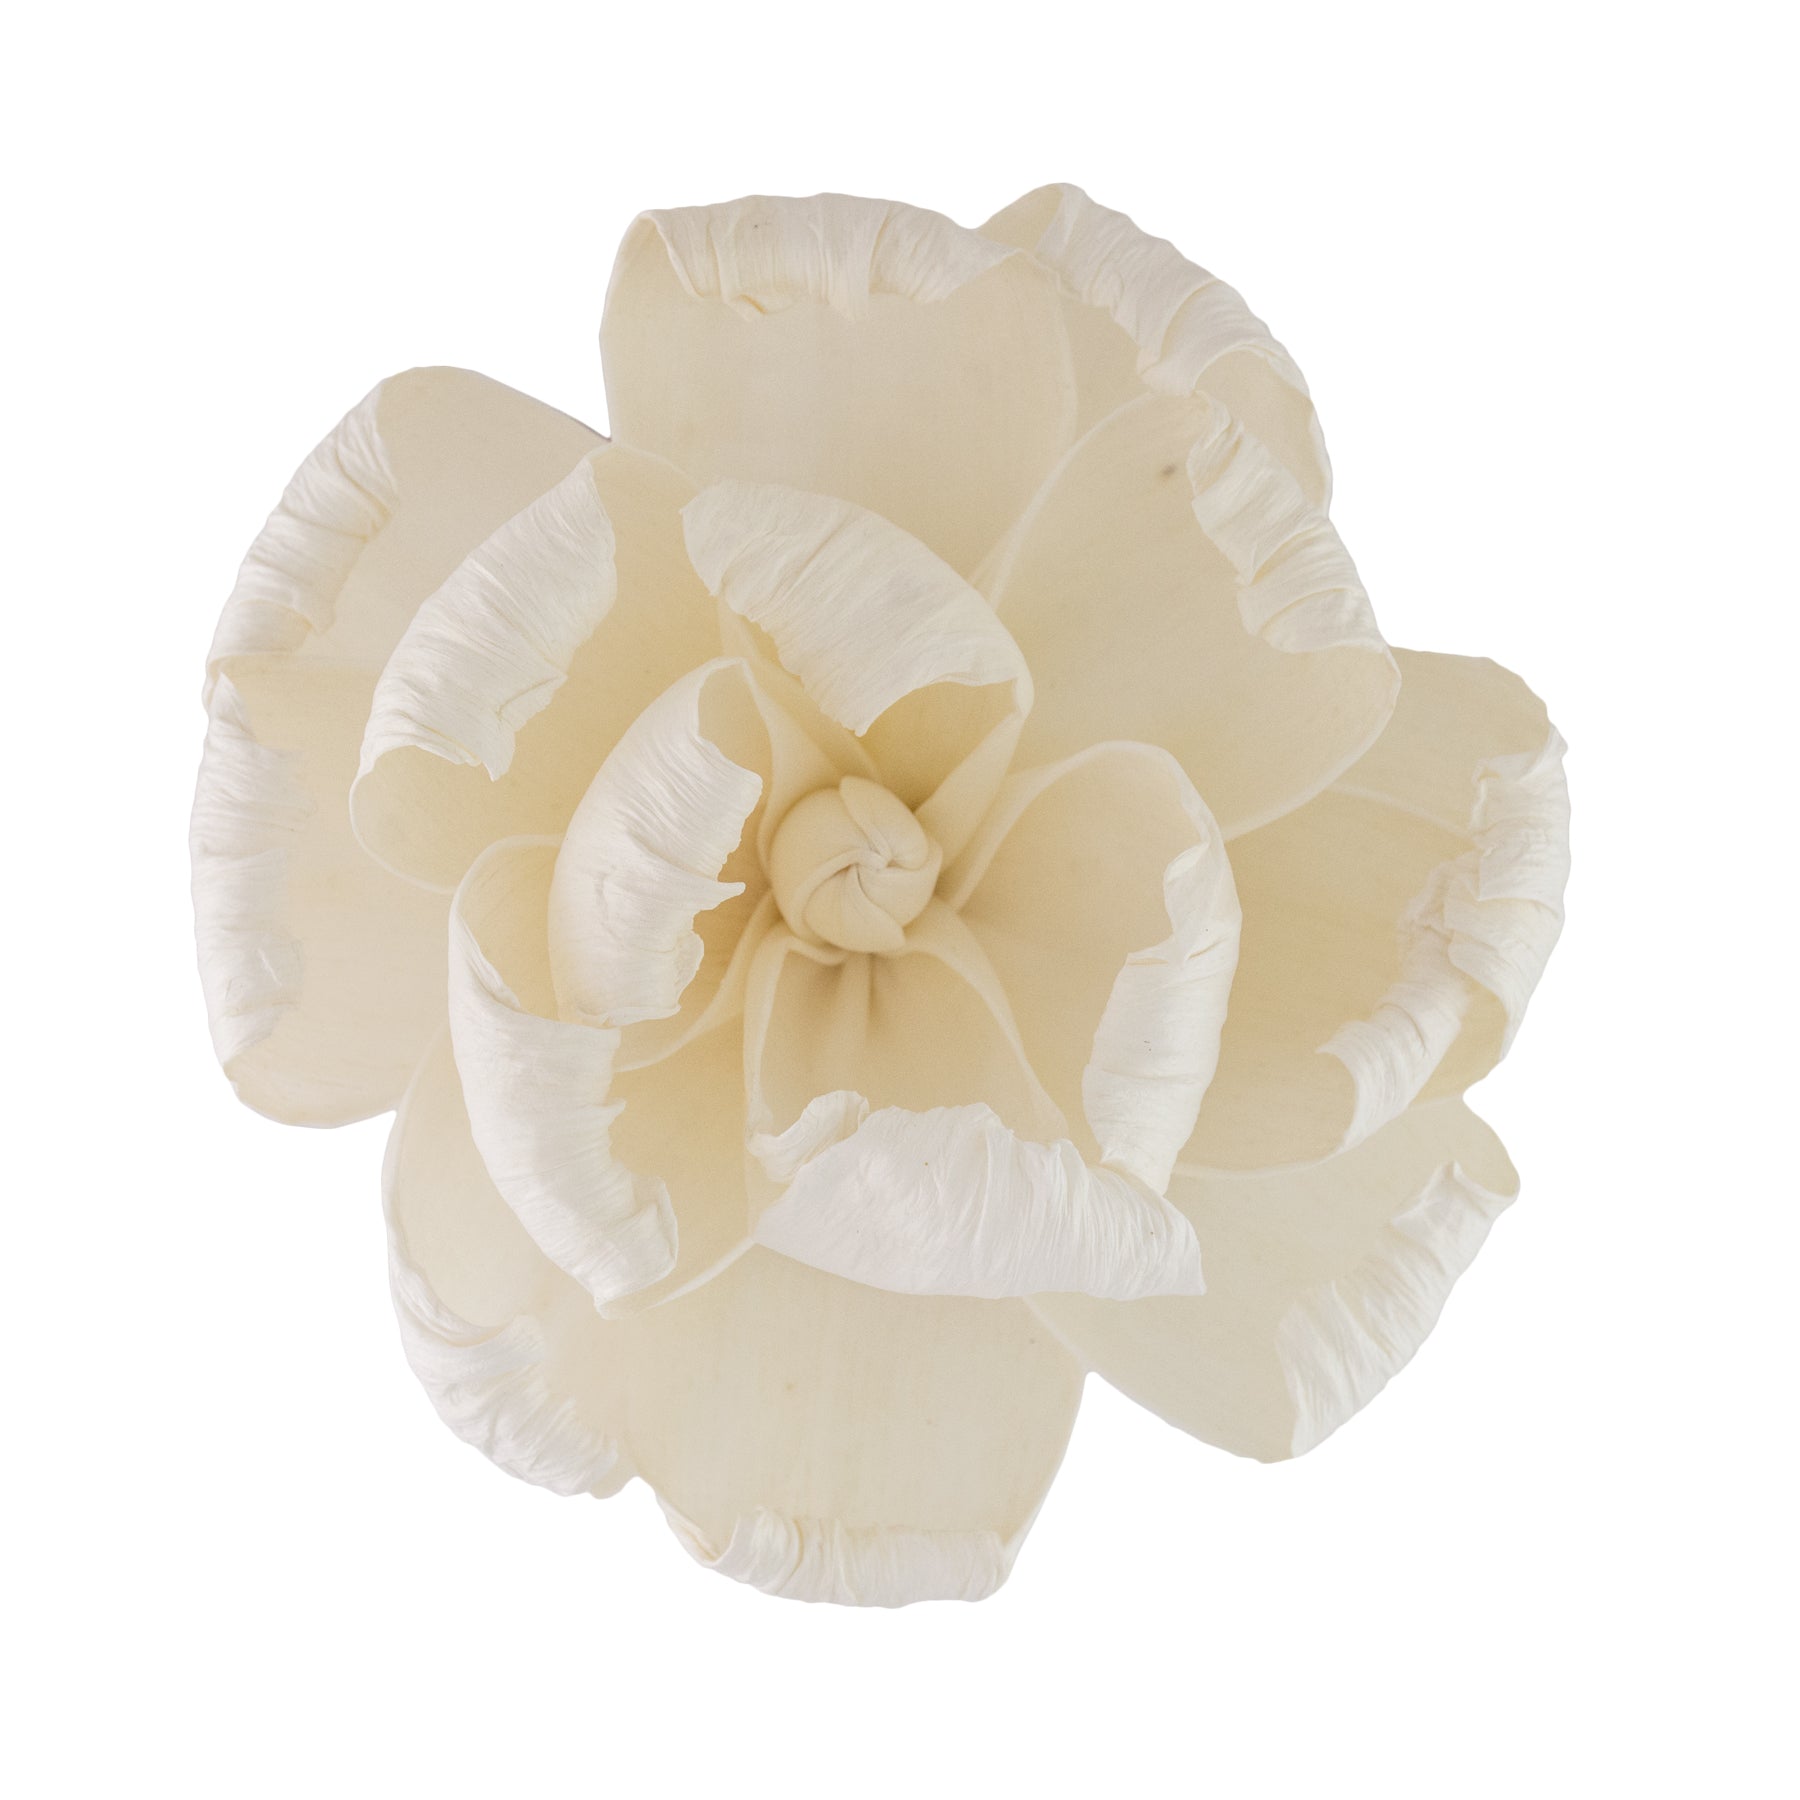 Solar Flower Diffuser Refill - Magnolia - HYSSES